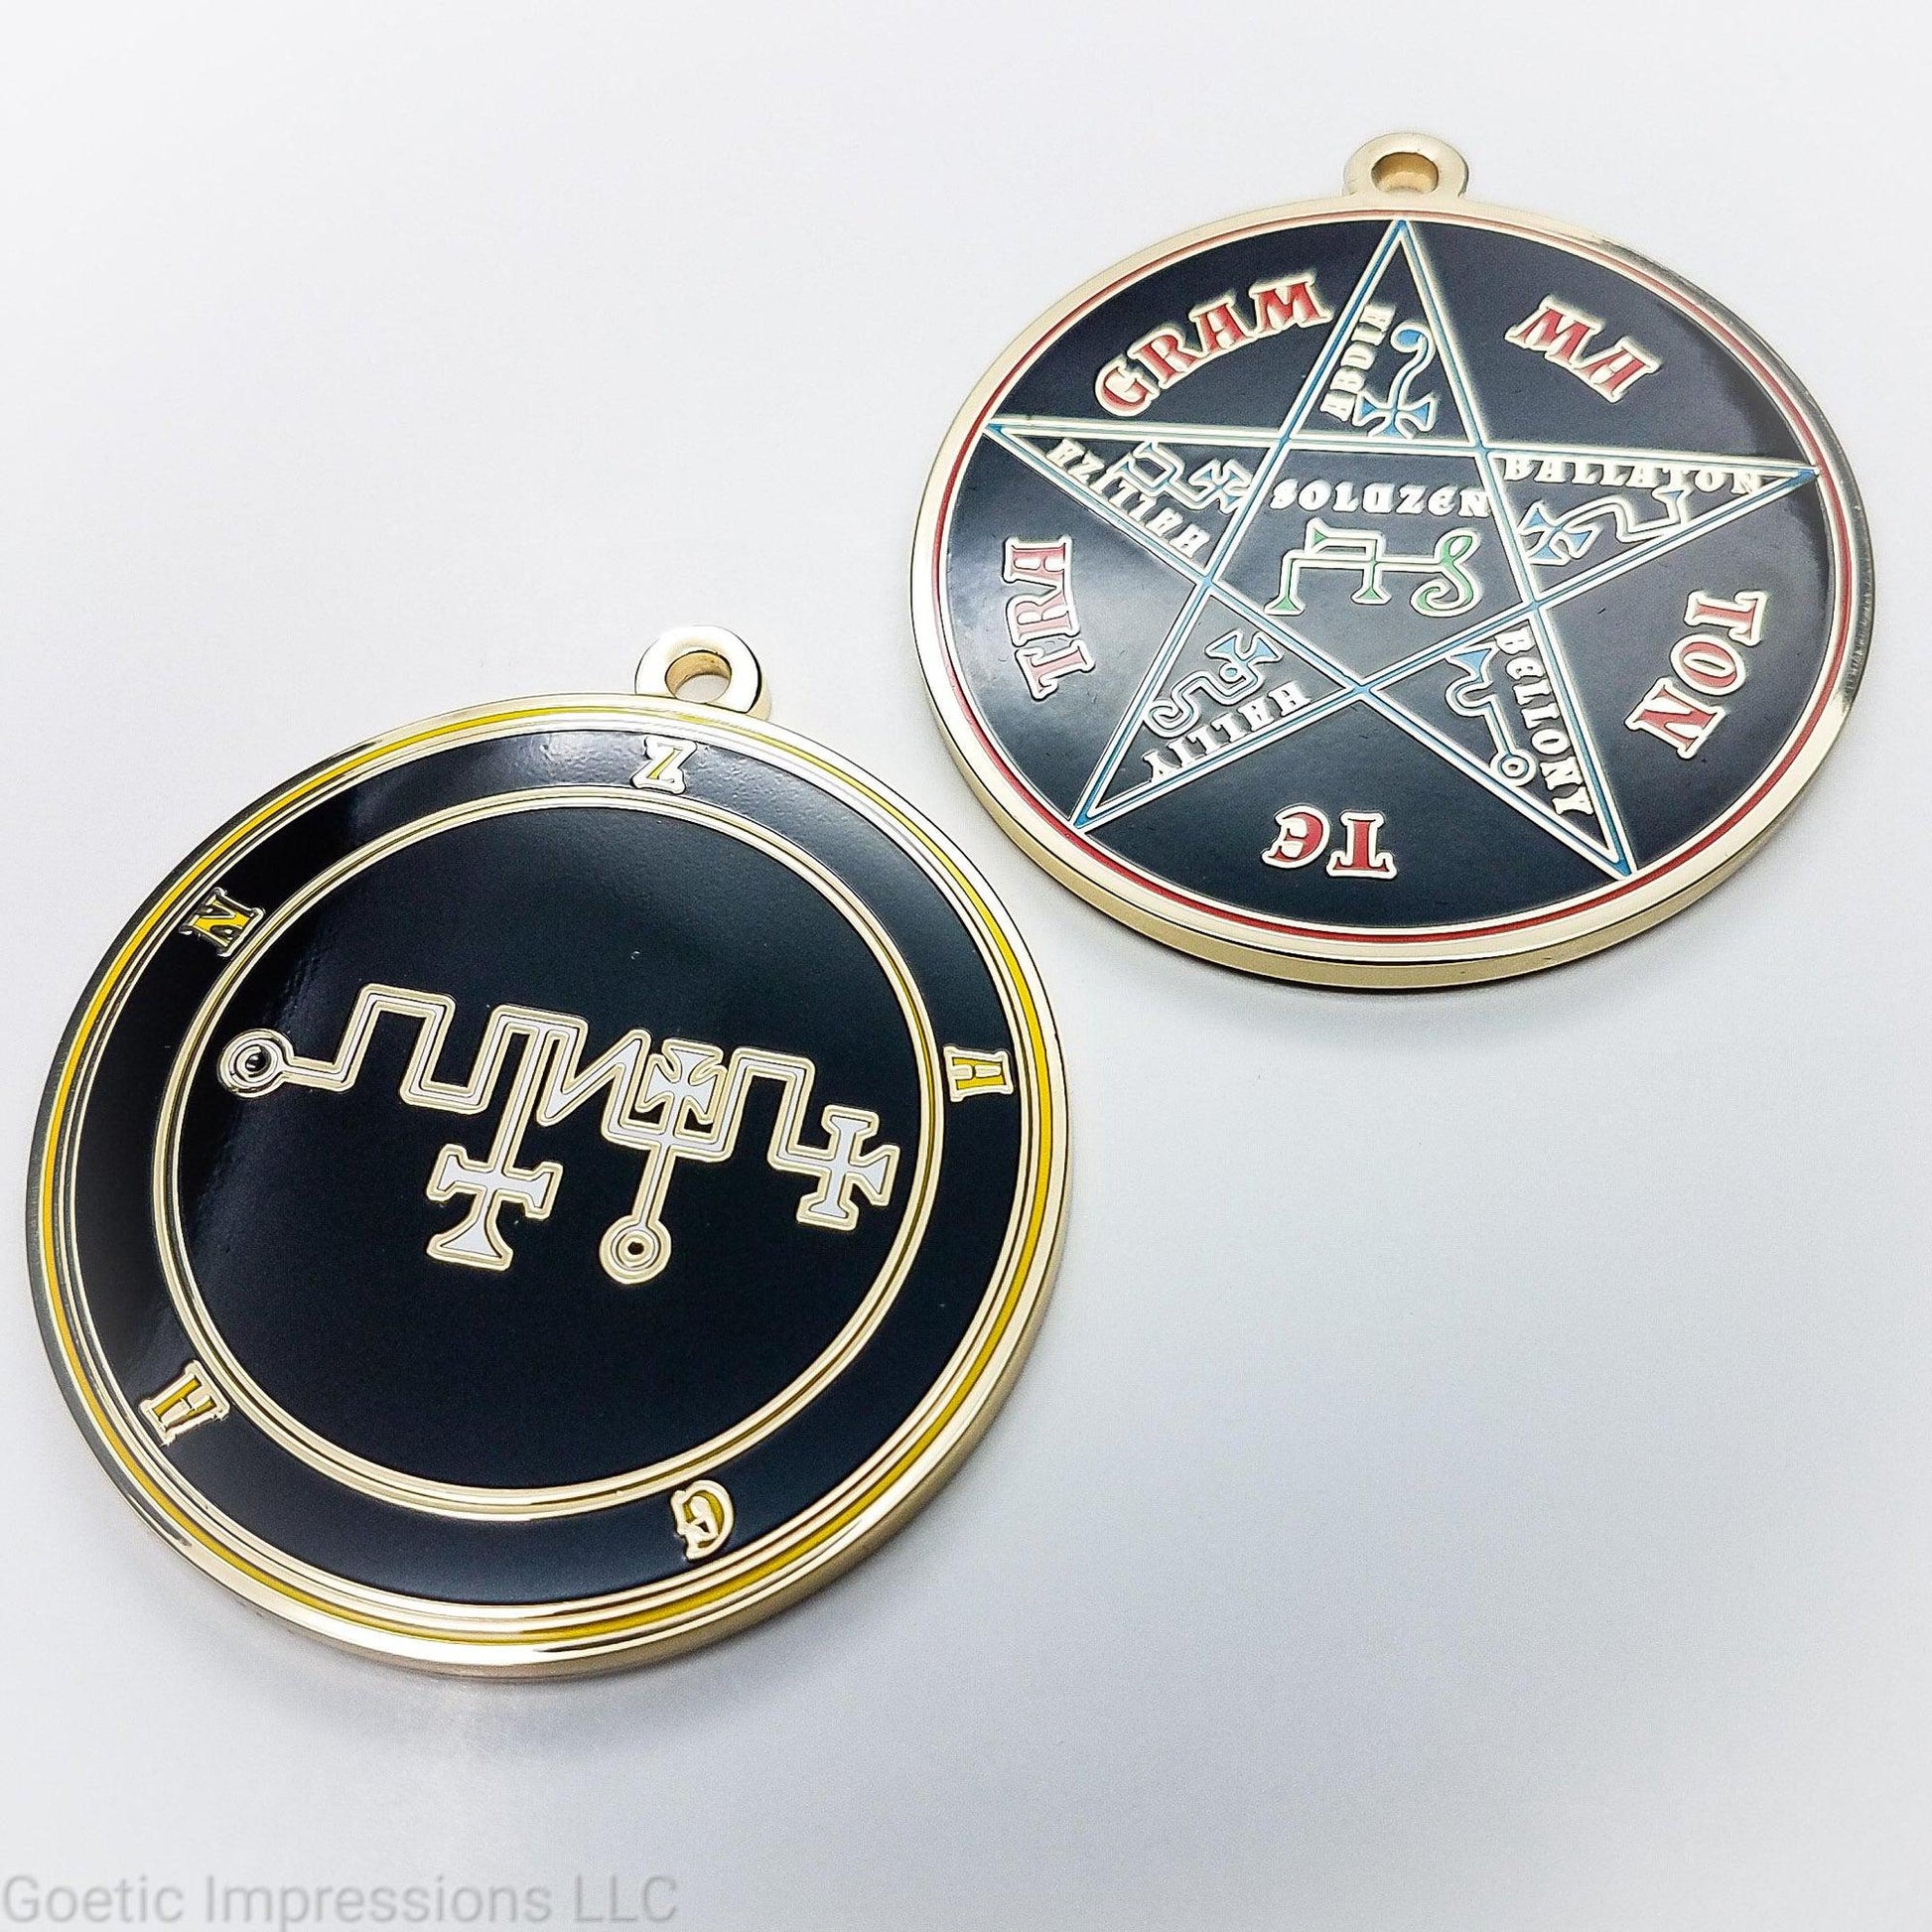 Zagan sigil pendant with pentacle of solomon on reverse side